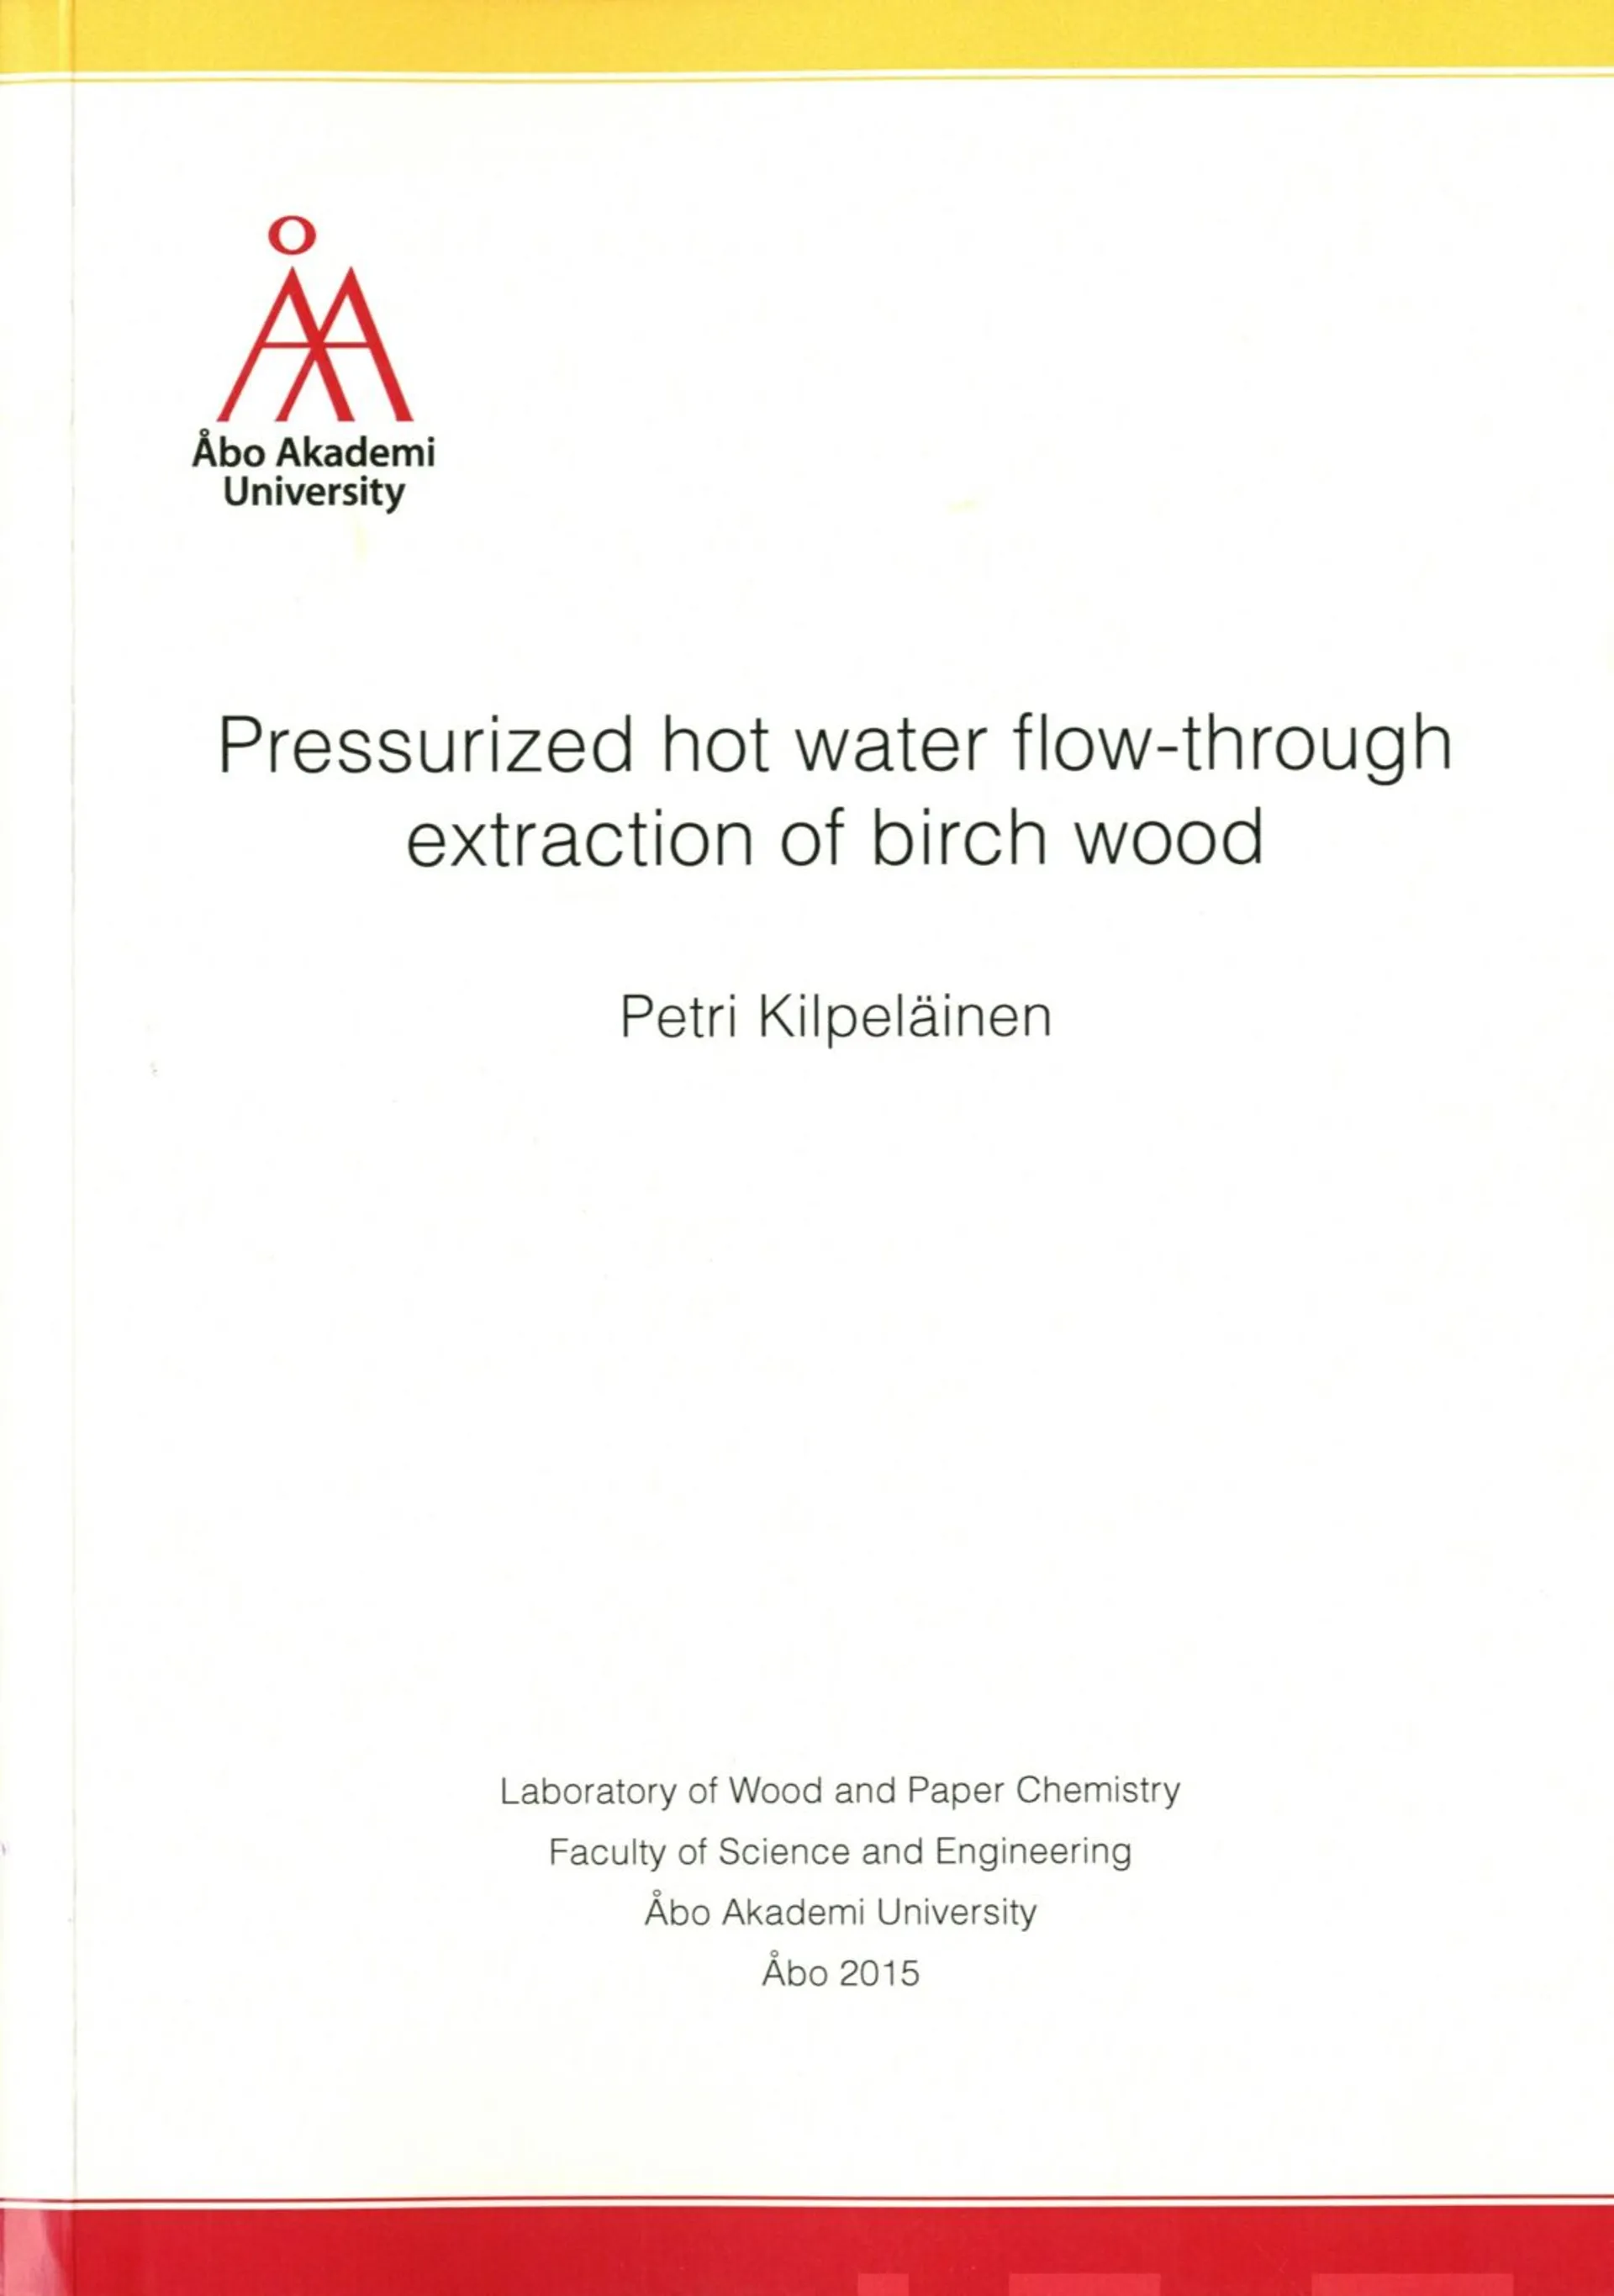 Kilpeläinen, Pressurized hot water flow-through extraction of birch wood